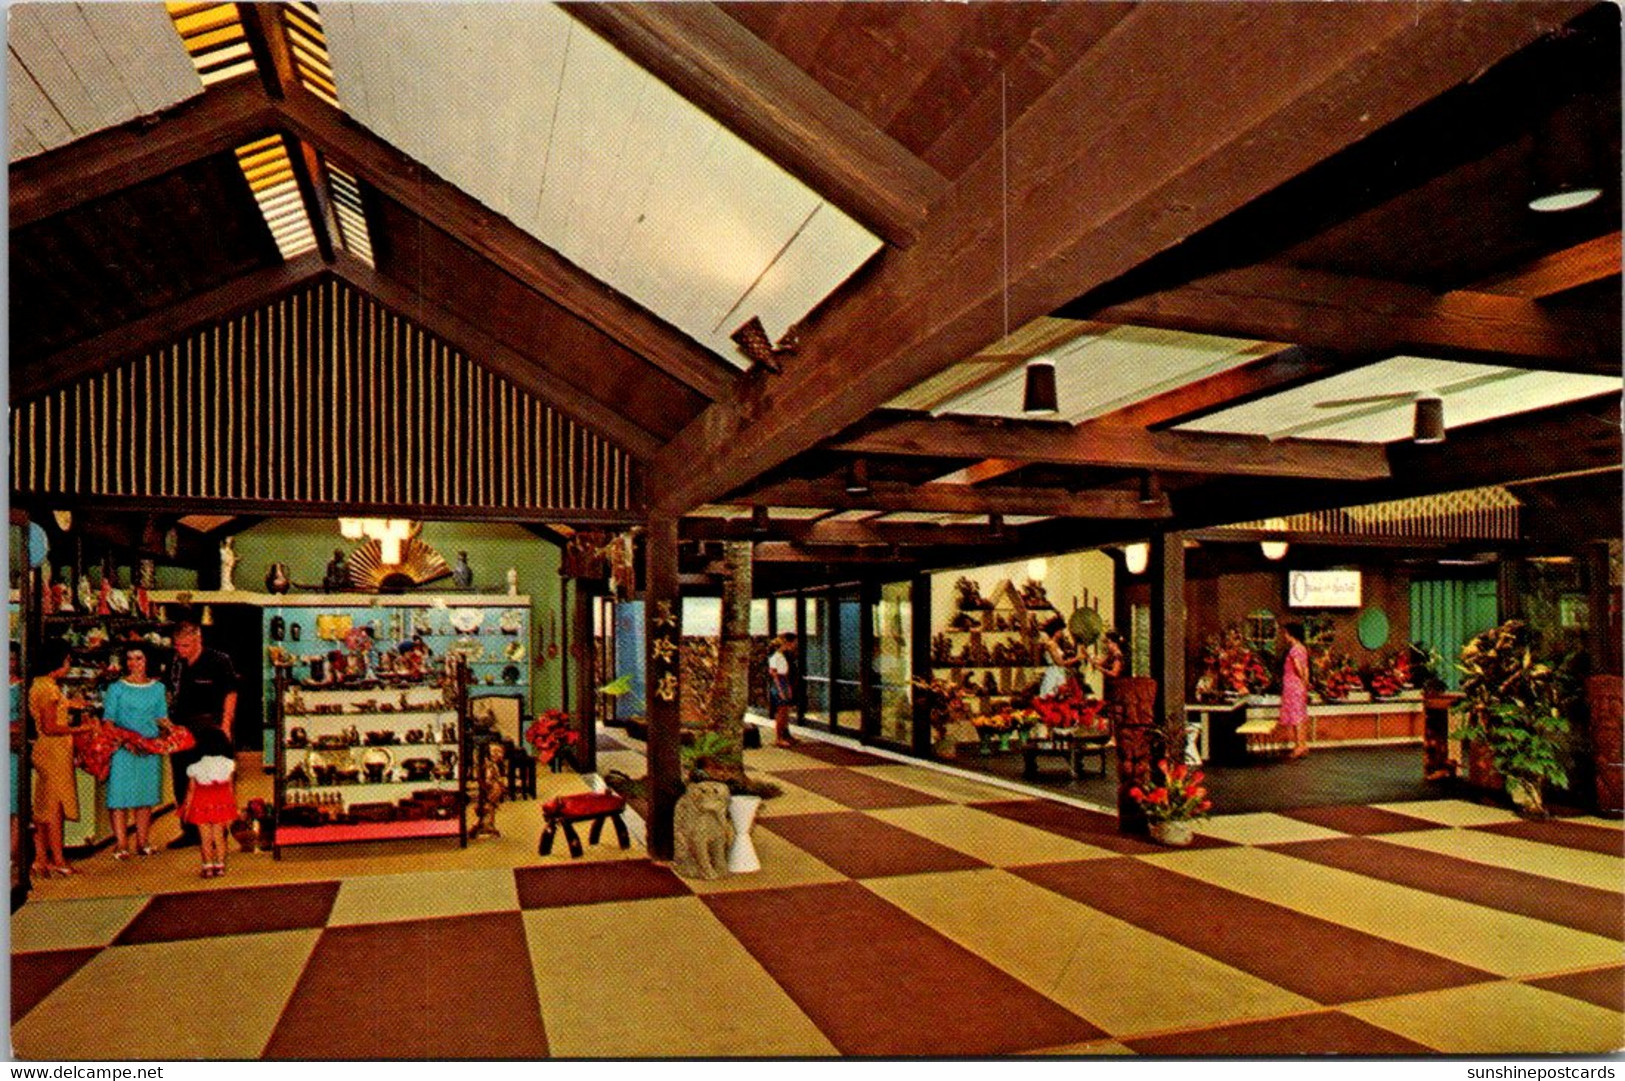 Hawaii Kauai Kalapaki Beach Arcade Shops Interior - Kauai